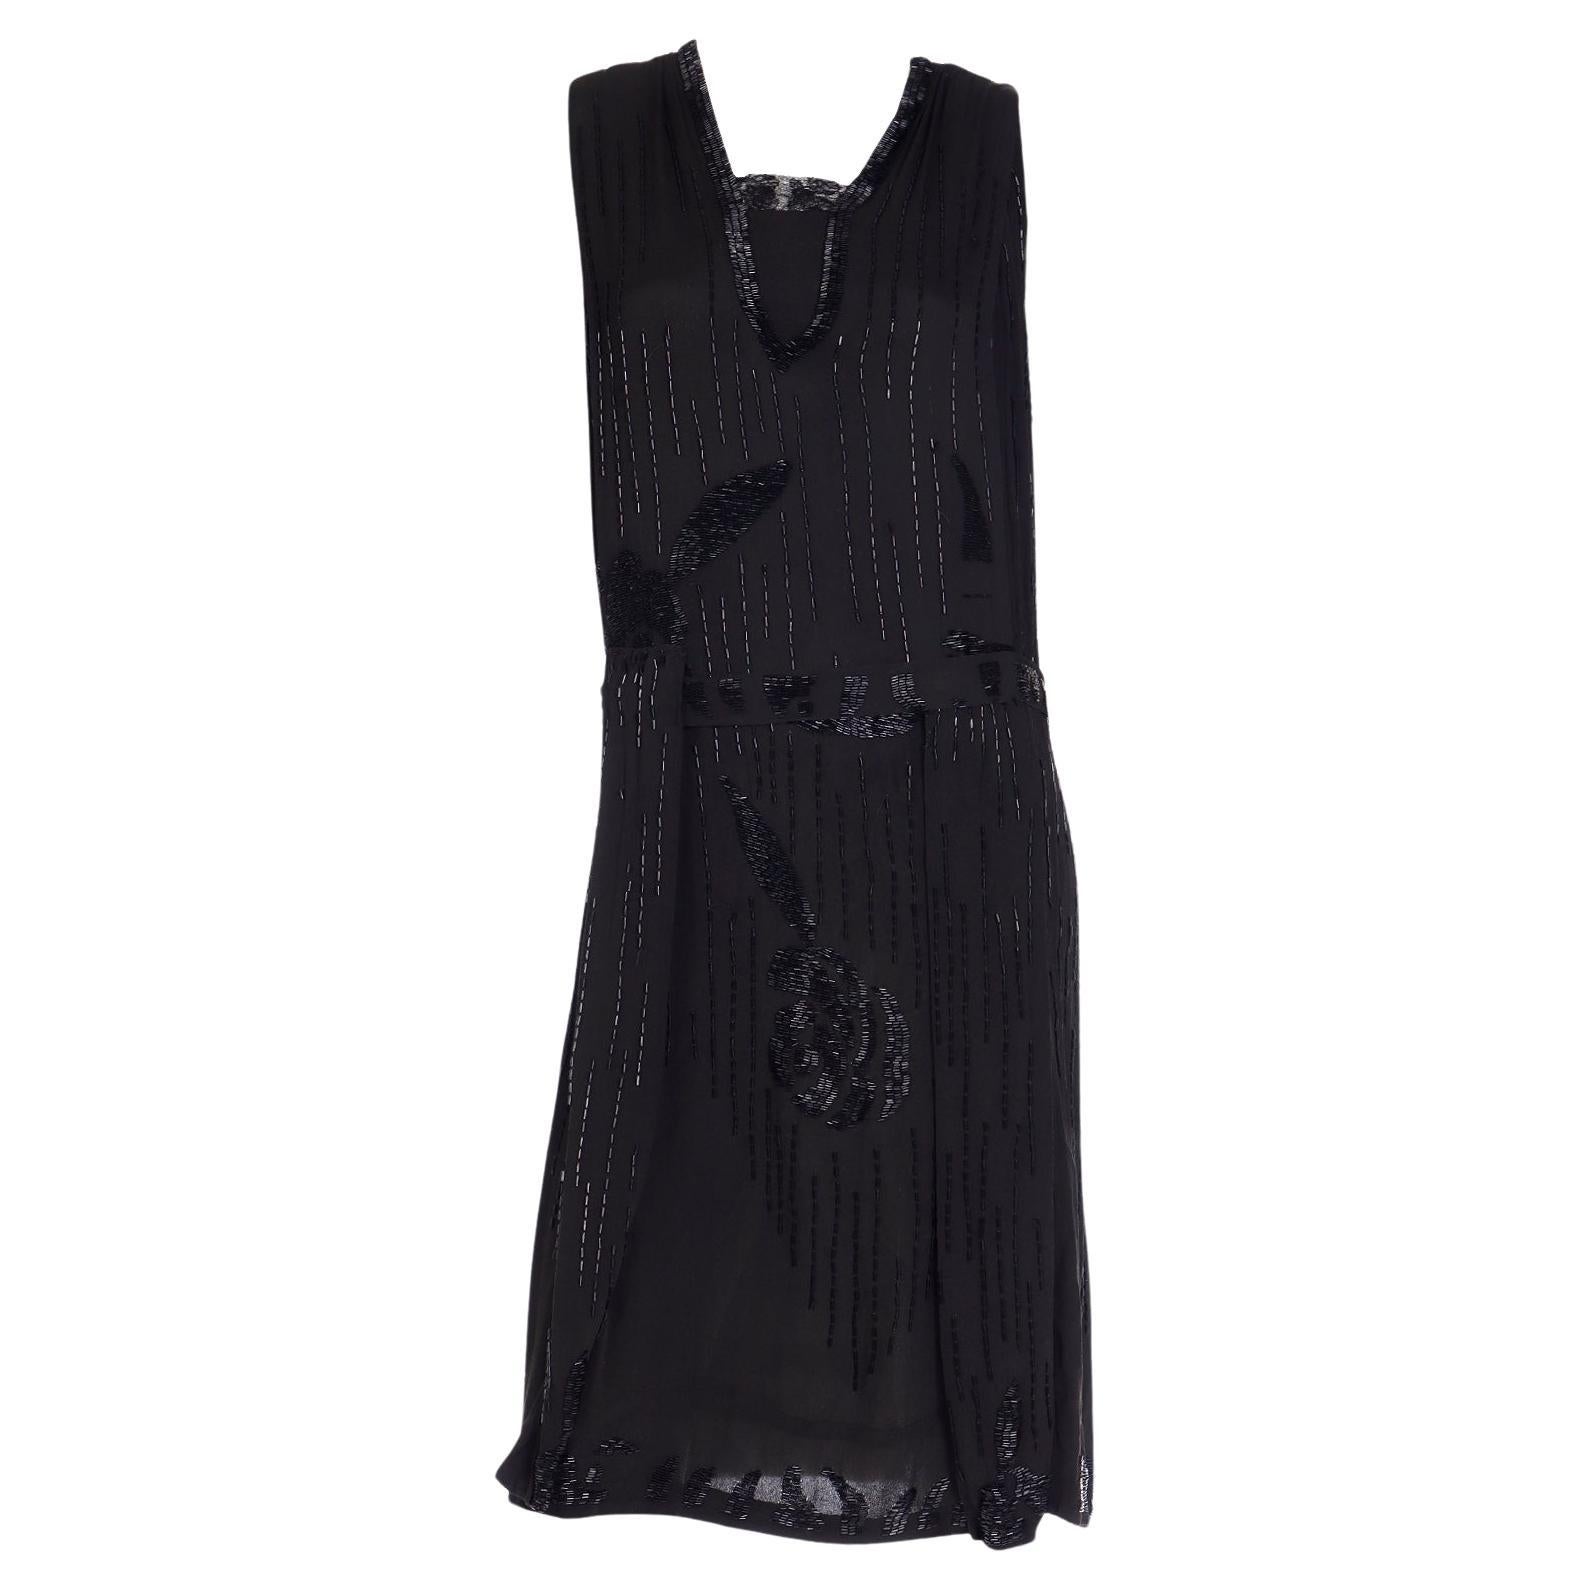 1920s Vintage Beaded Black Evening Dress